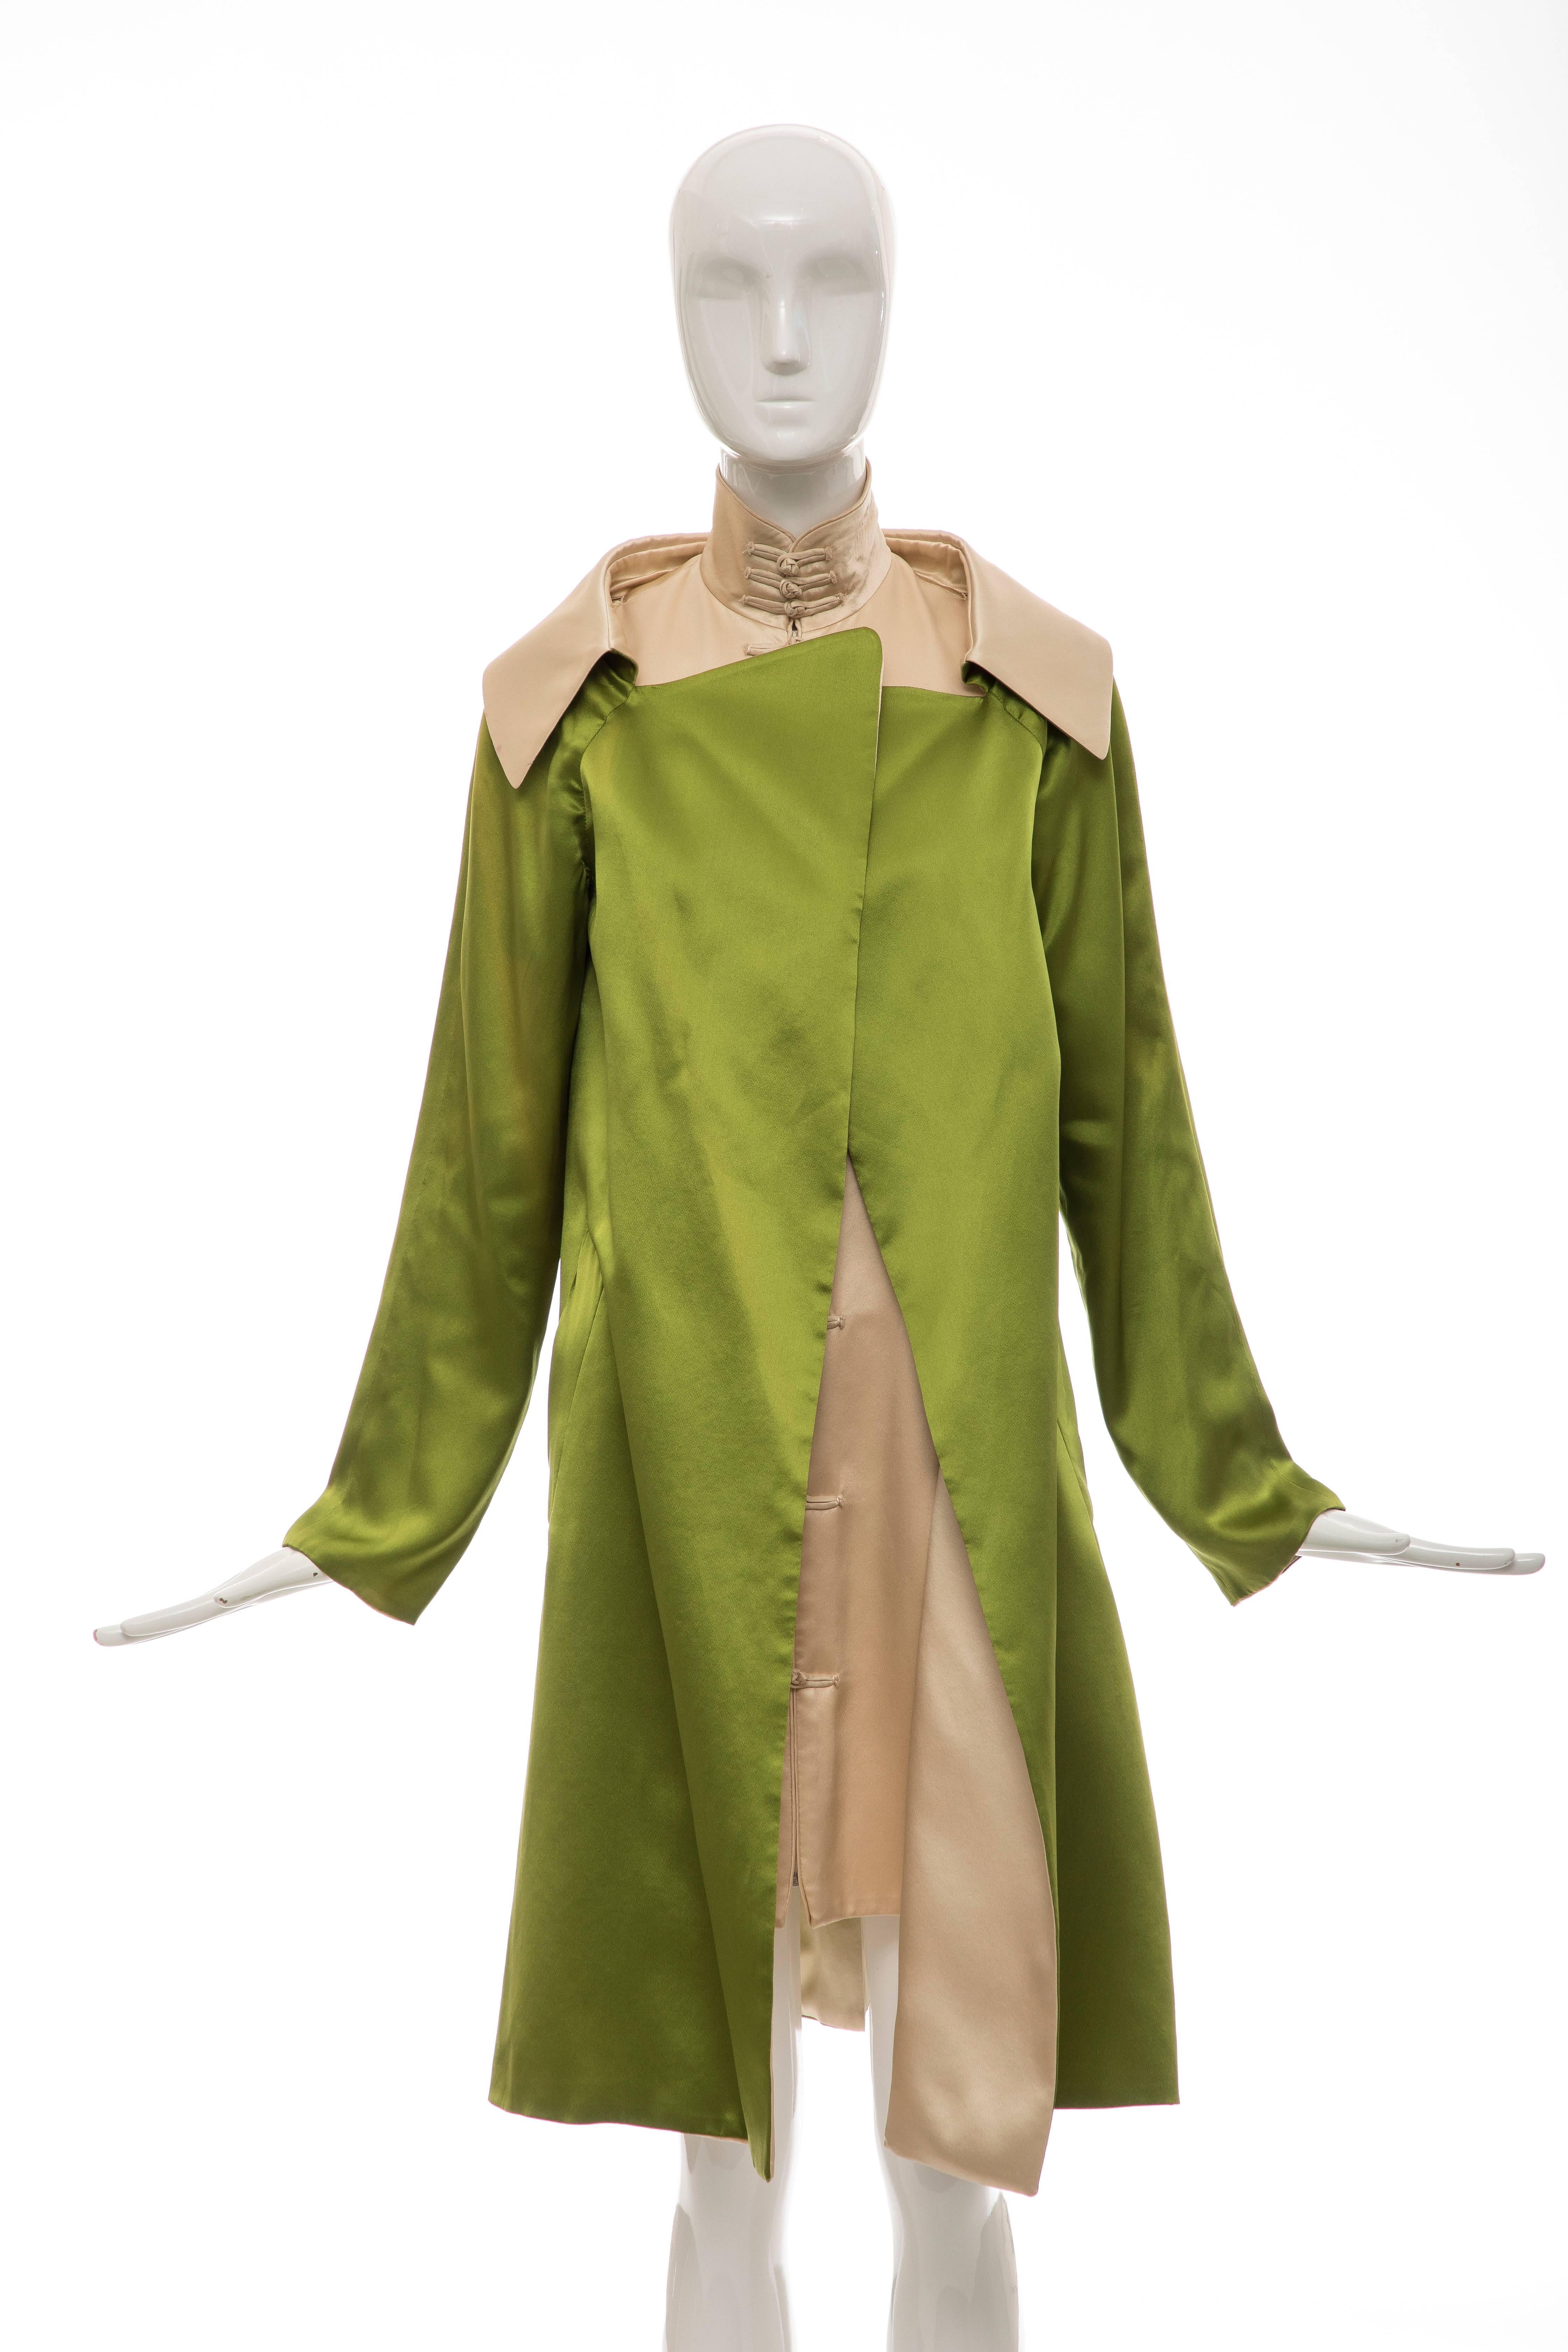 Jean Paul Gaultier Silk Charmeuse Dress Coat, Fall 2010 6